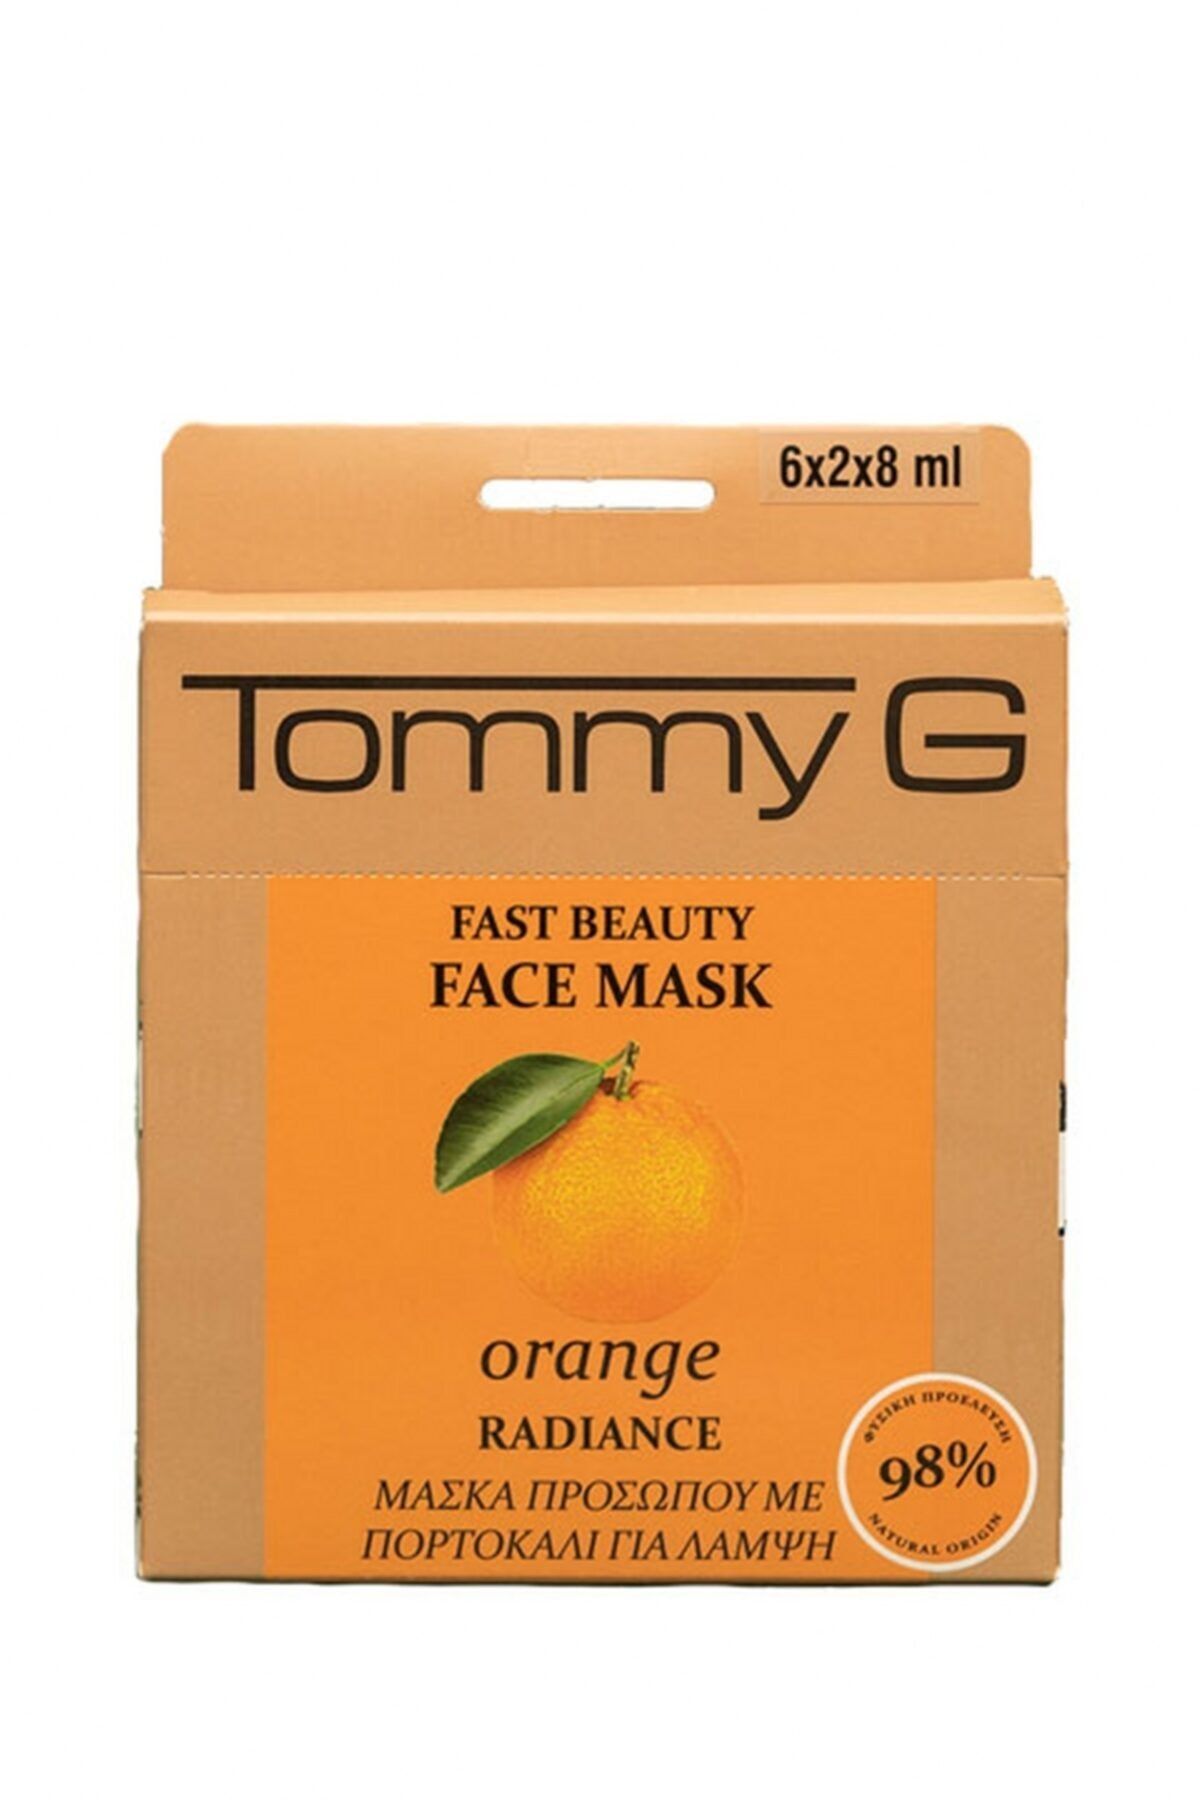 TOMMY G Fast Beauty F.mask Orange Tg Box - Hızlı Güzellik Maskesi Turuncu - Tg5fb-bor-f15